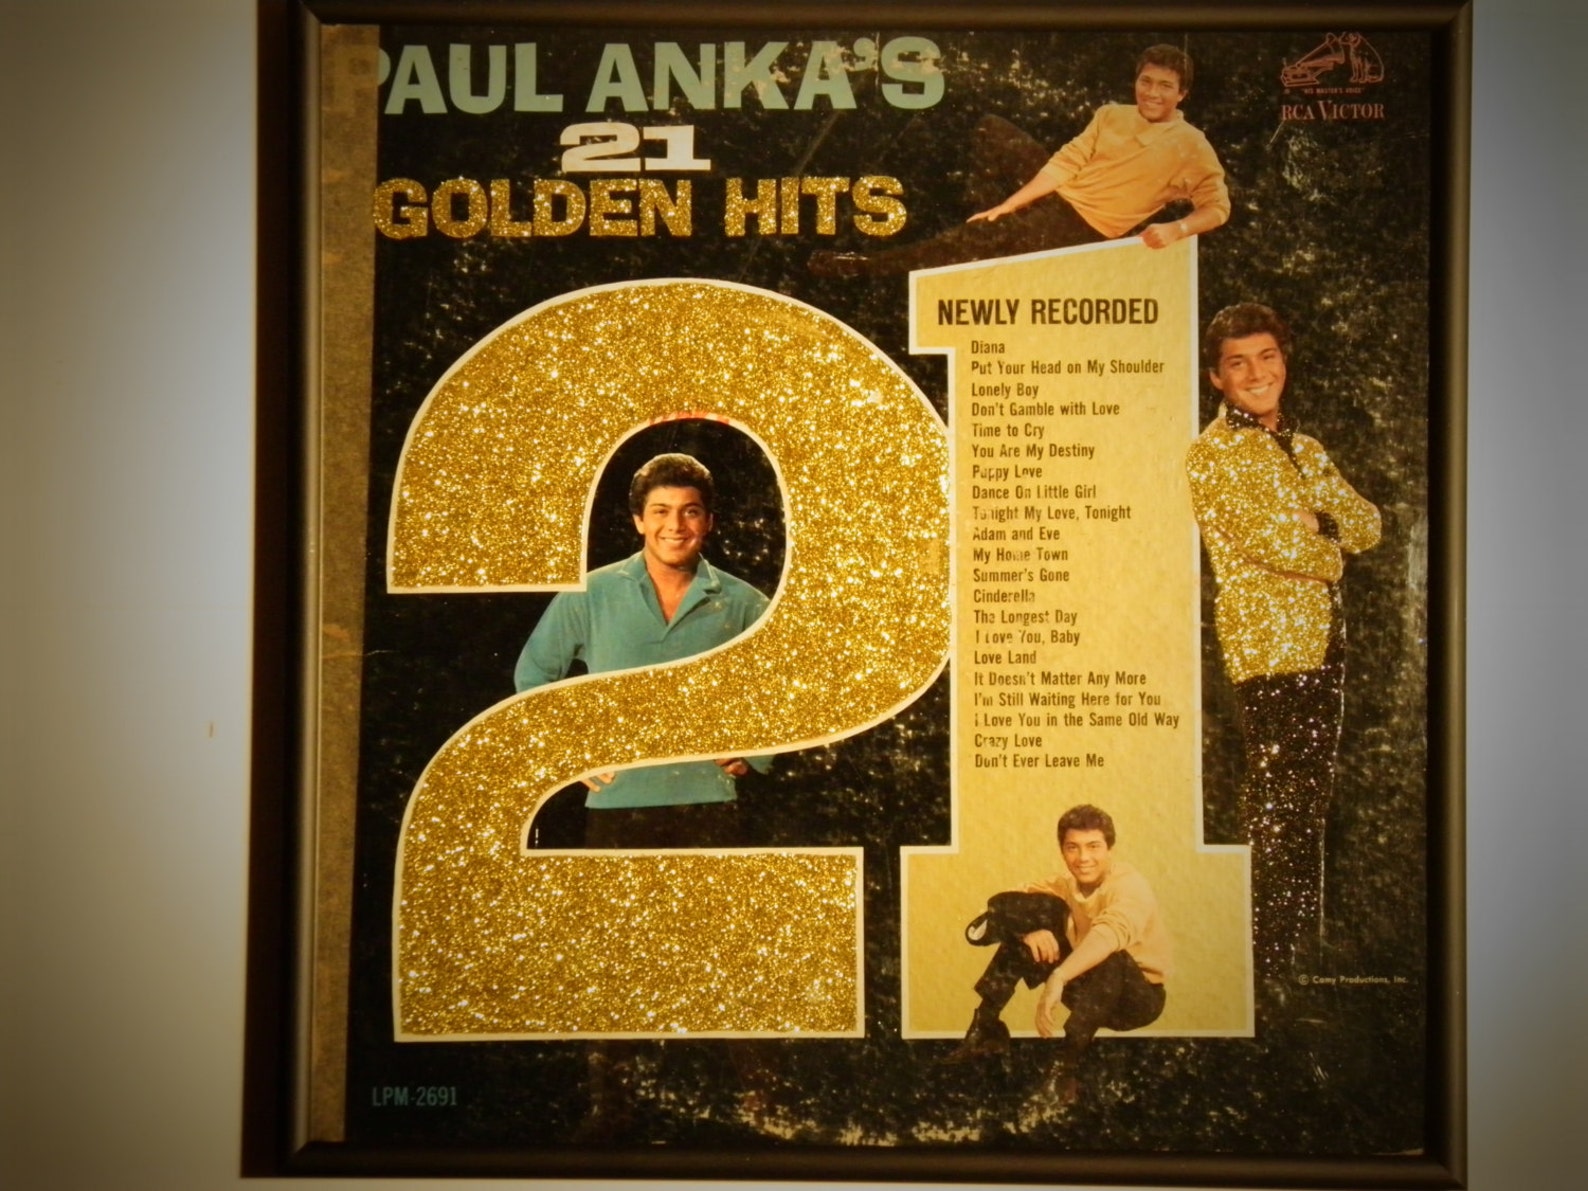 Paul records. Paul Anka 21 Golden Hits.